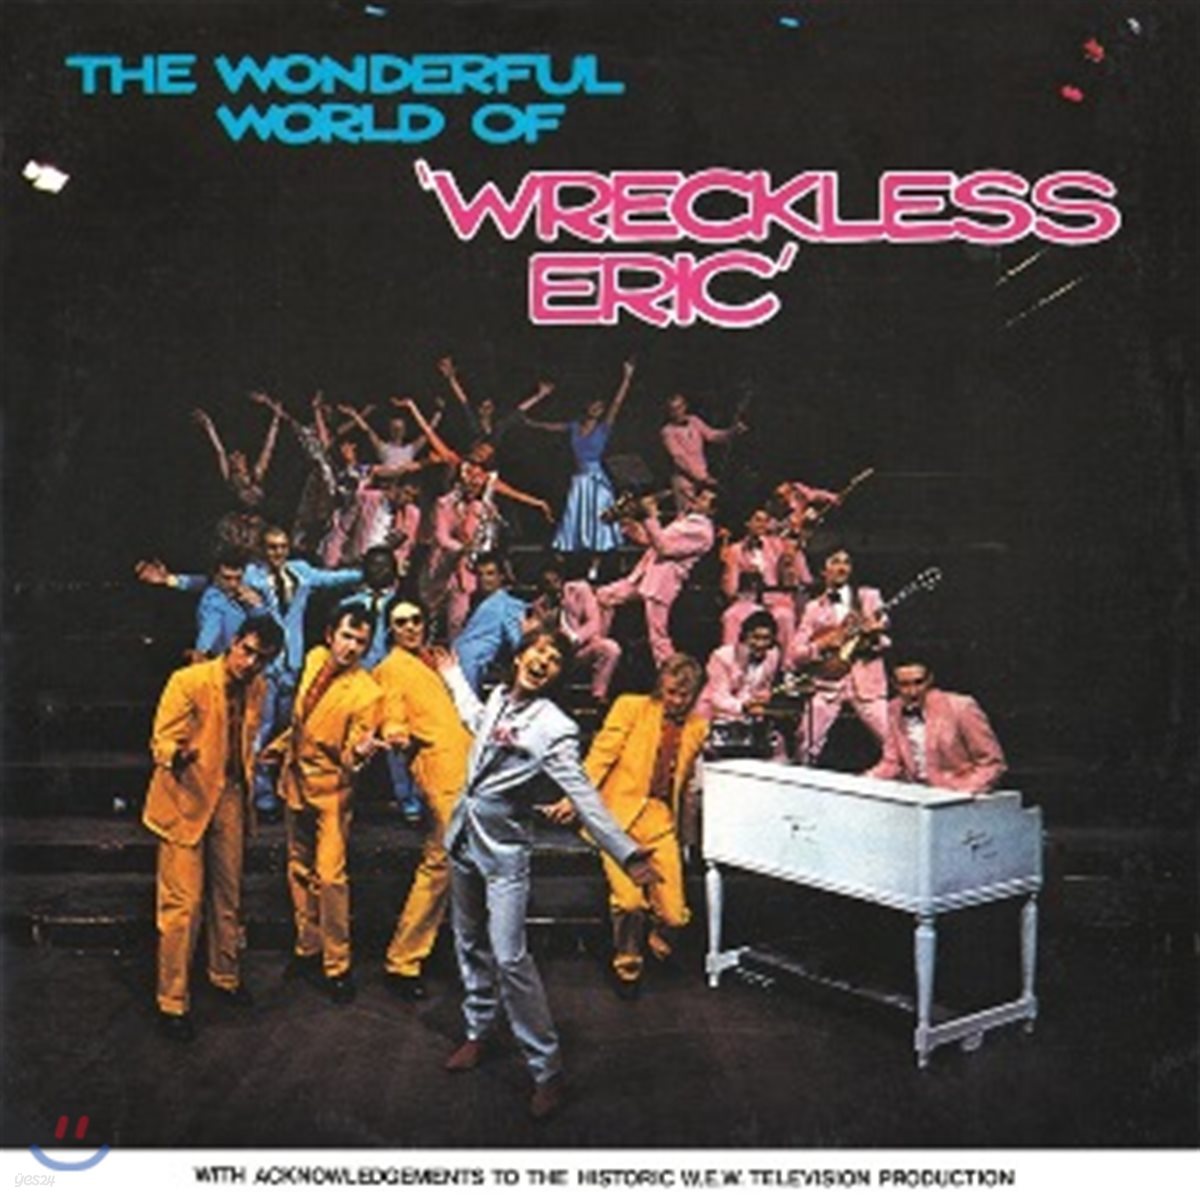 Wreckless Eric (레클리스 에릭) - The Wonderful World Of Wreckless Eric